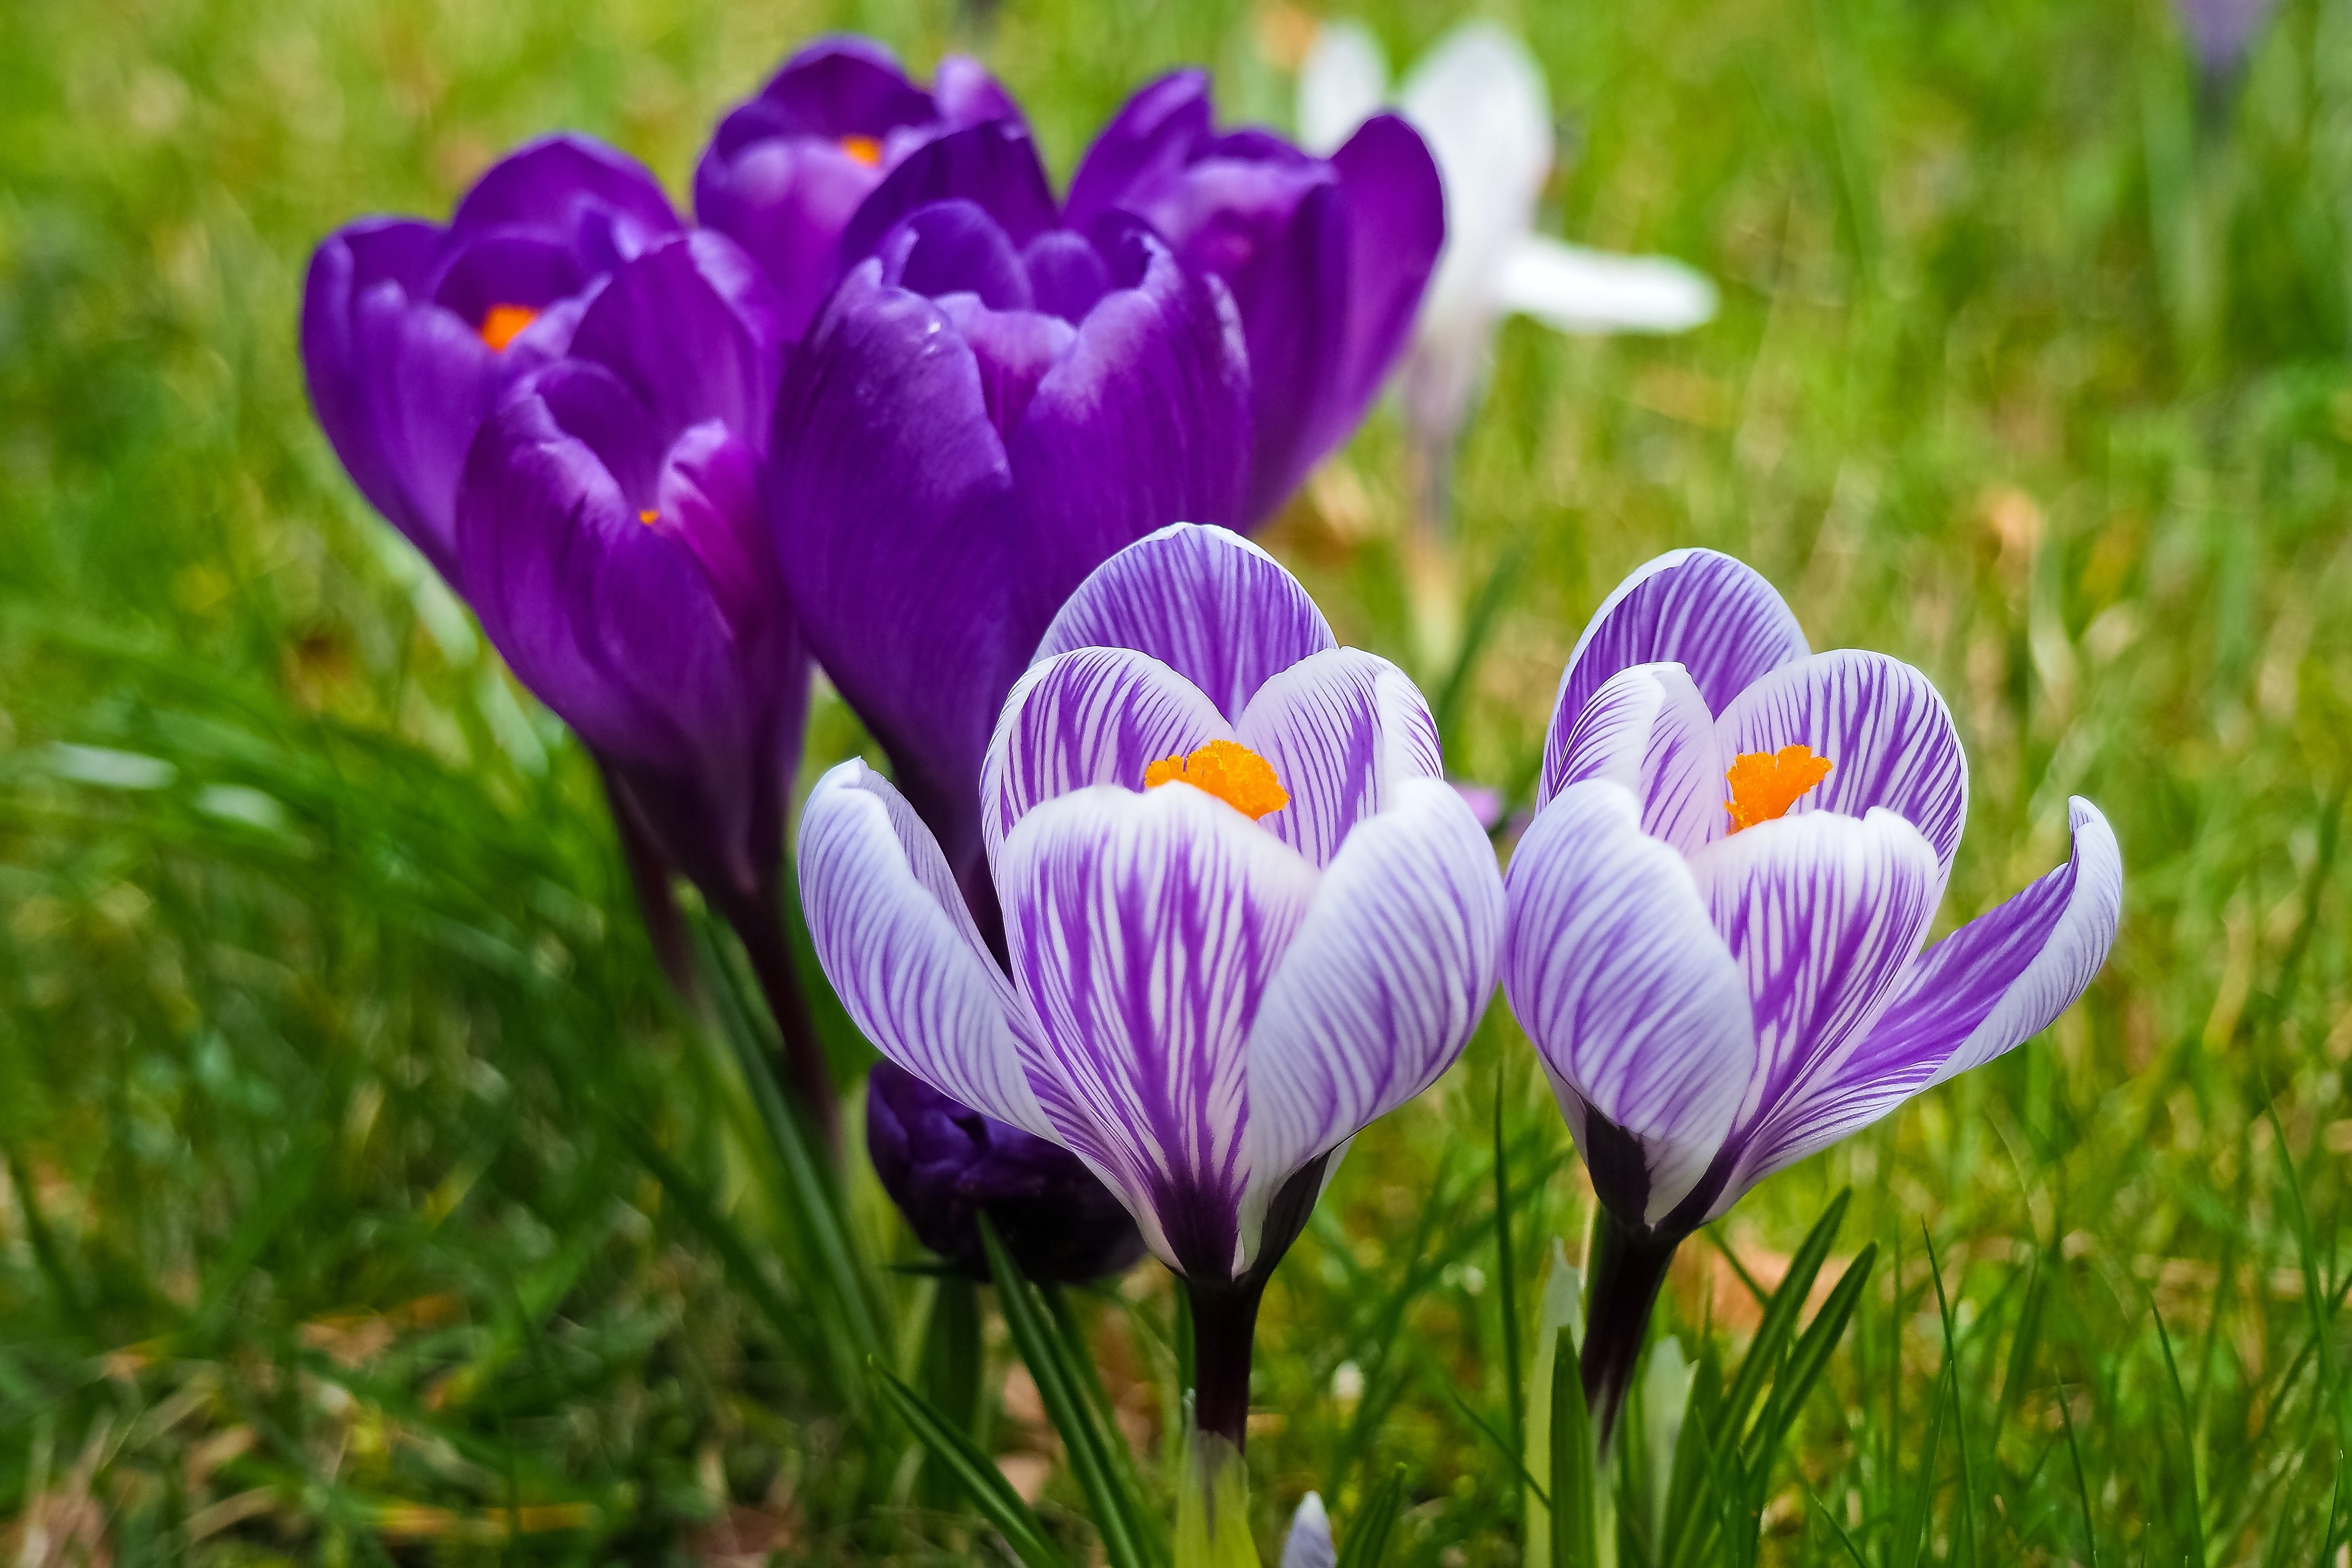 Wonderful purple and white crocuses spring flowers